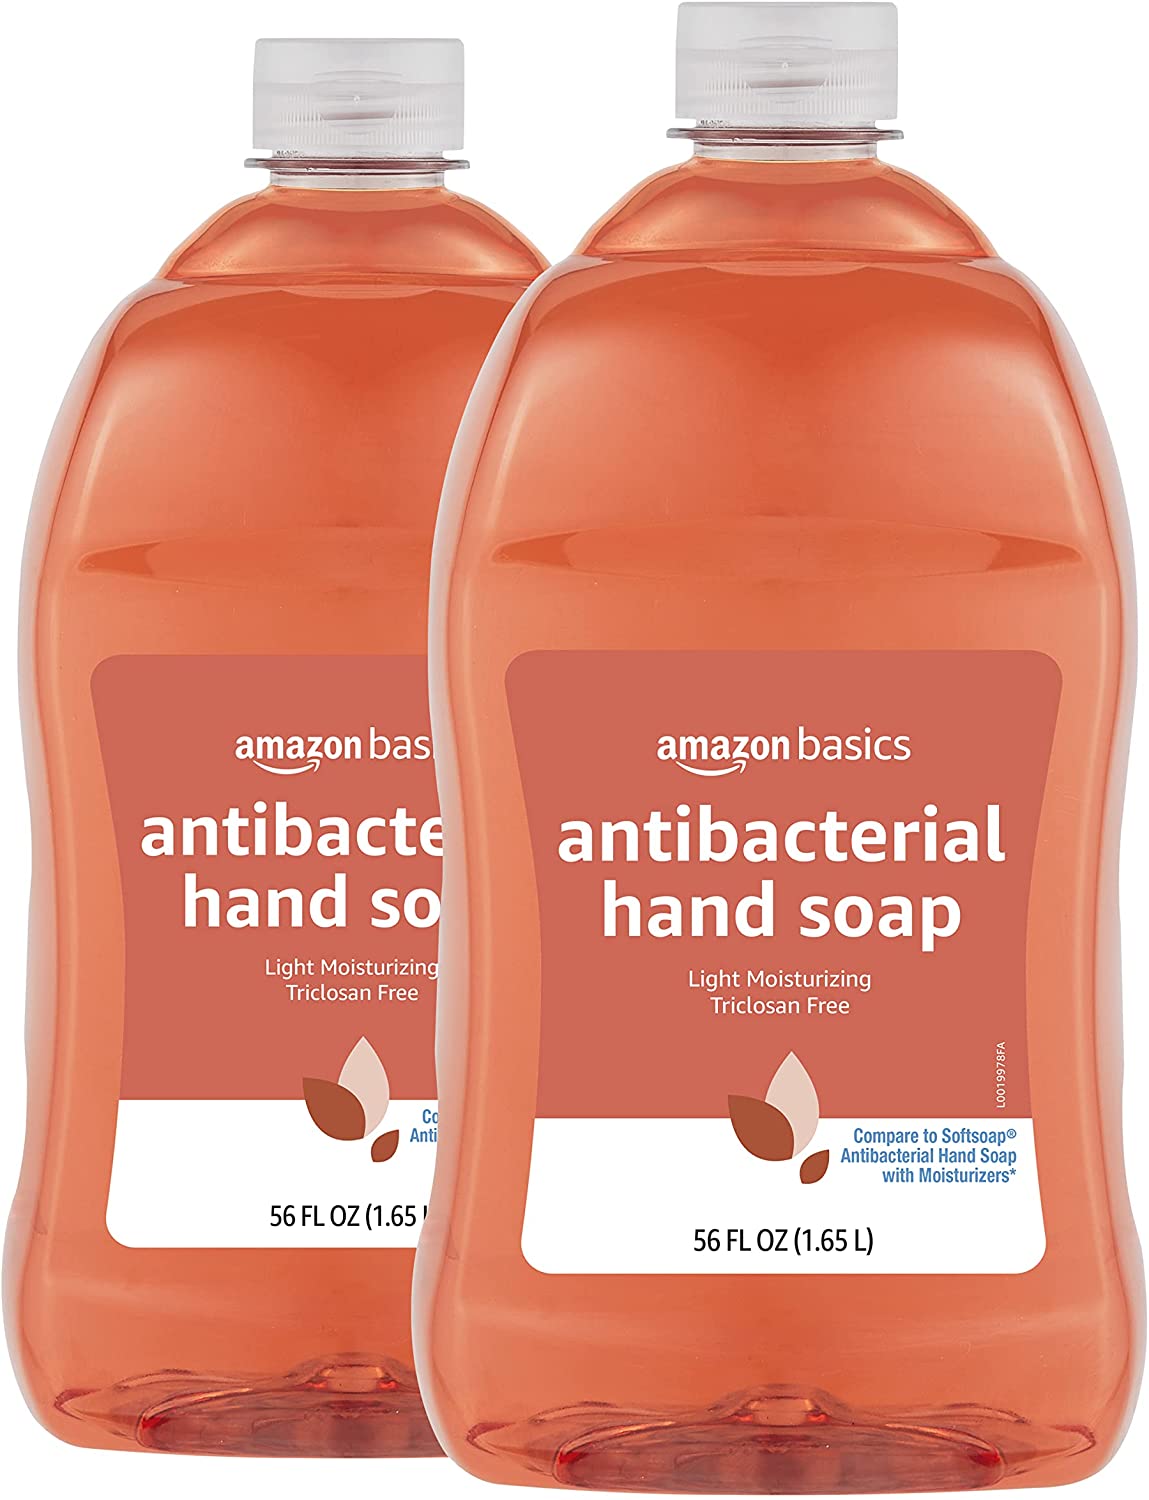 Amazon Basics Antibacterial Liquid Hand Soap Refill 56 Fluid Ounces, 2-Pack - $5.29 YMMV